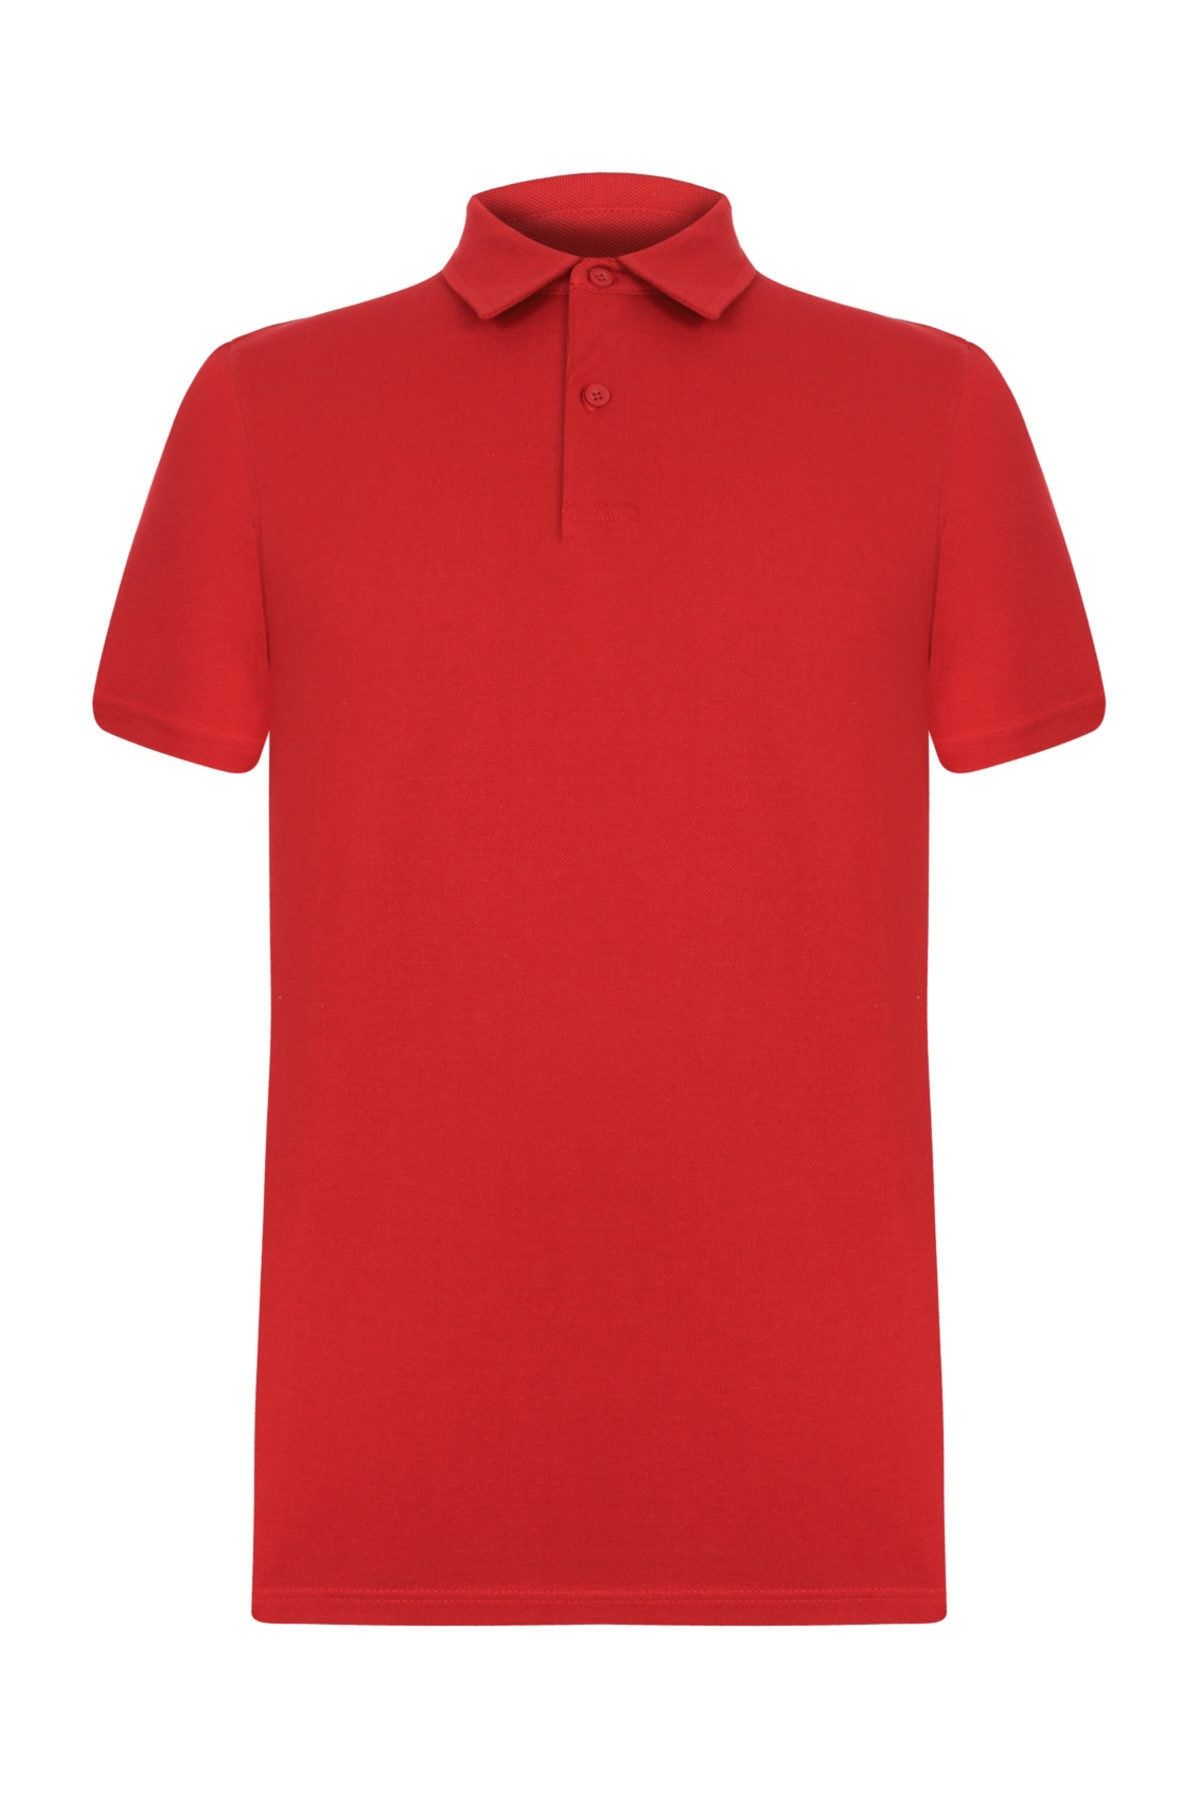 Mudo Erkek Kırmızı Polo Yaka Pamuk T-Shirt 372286